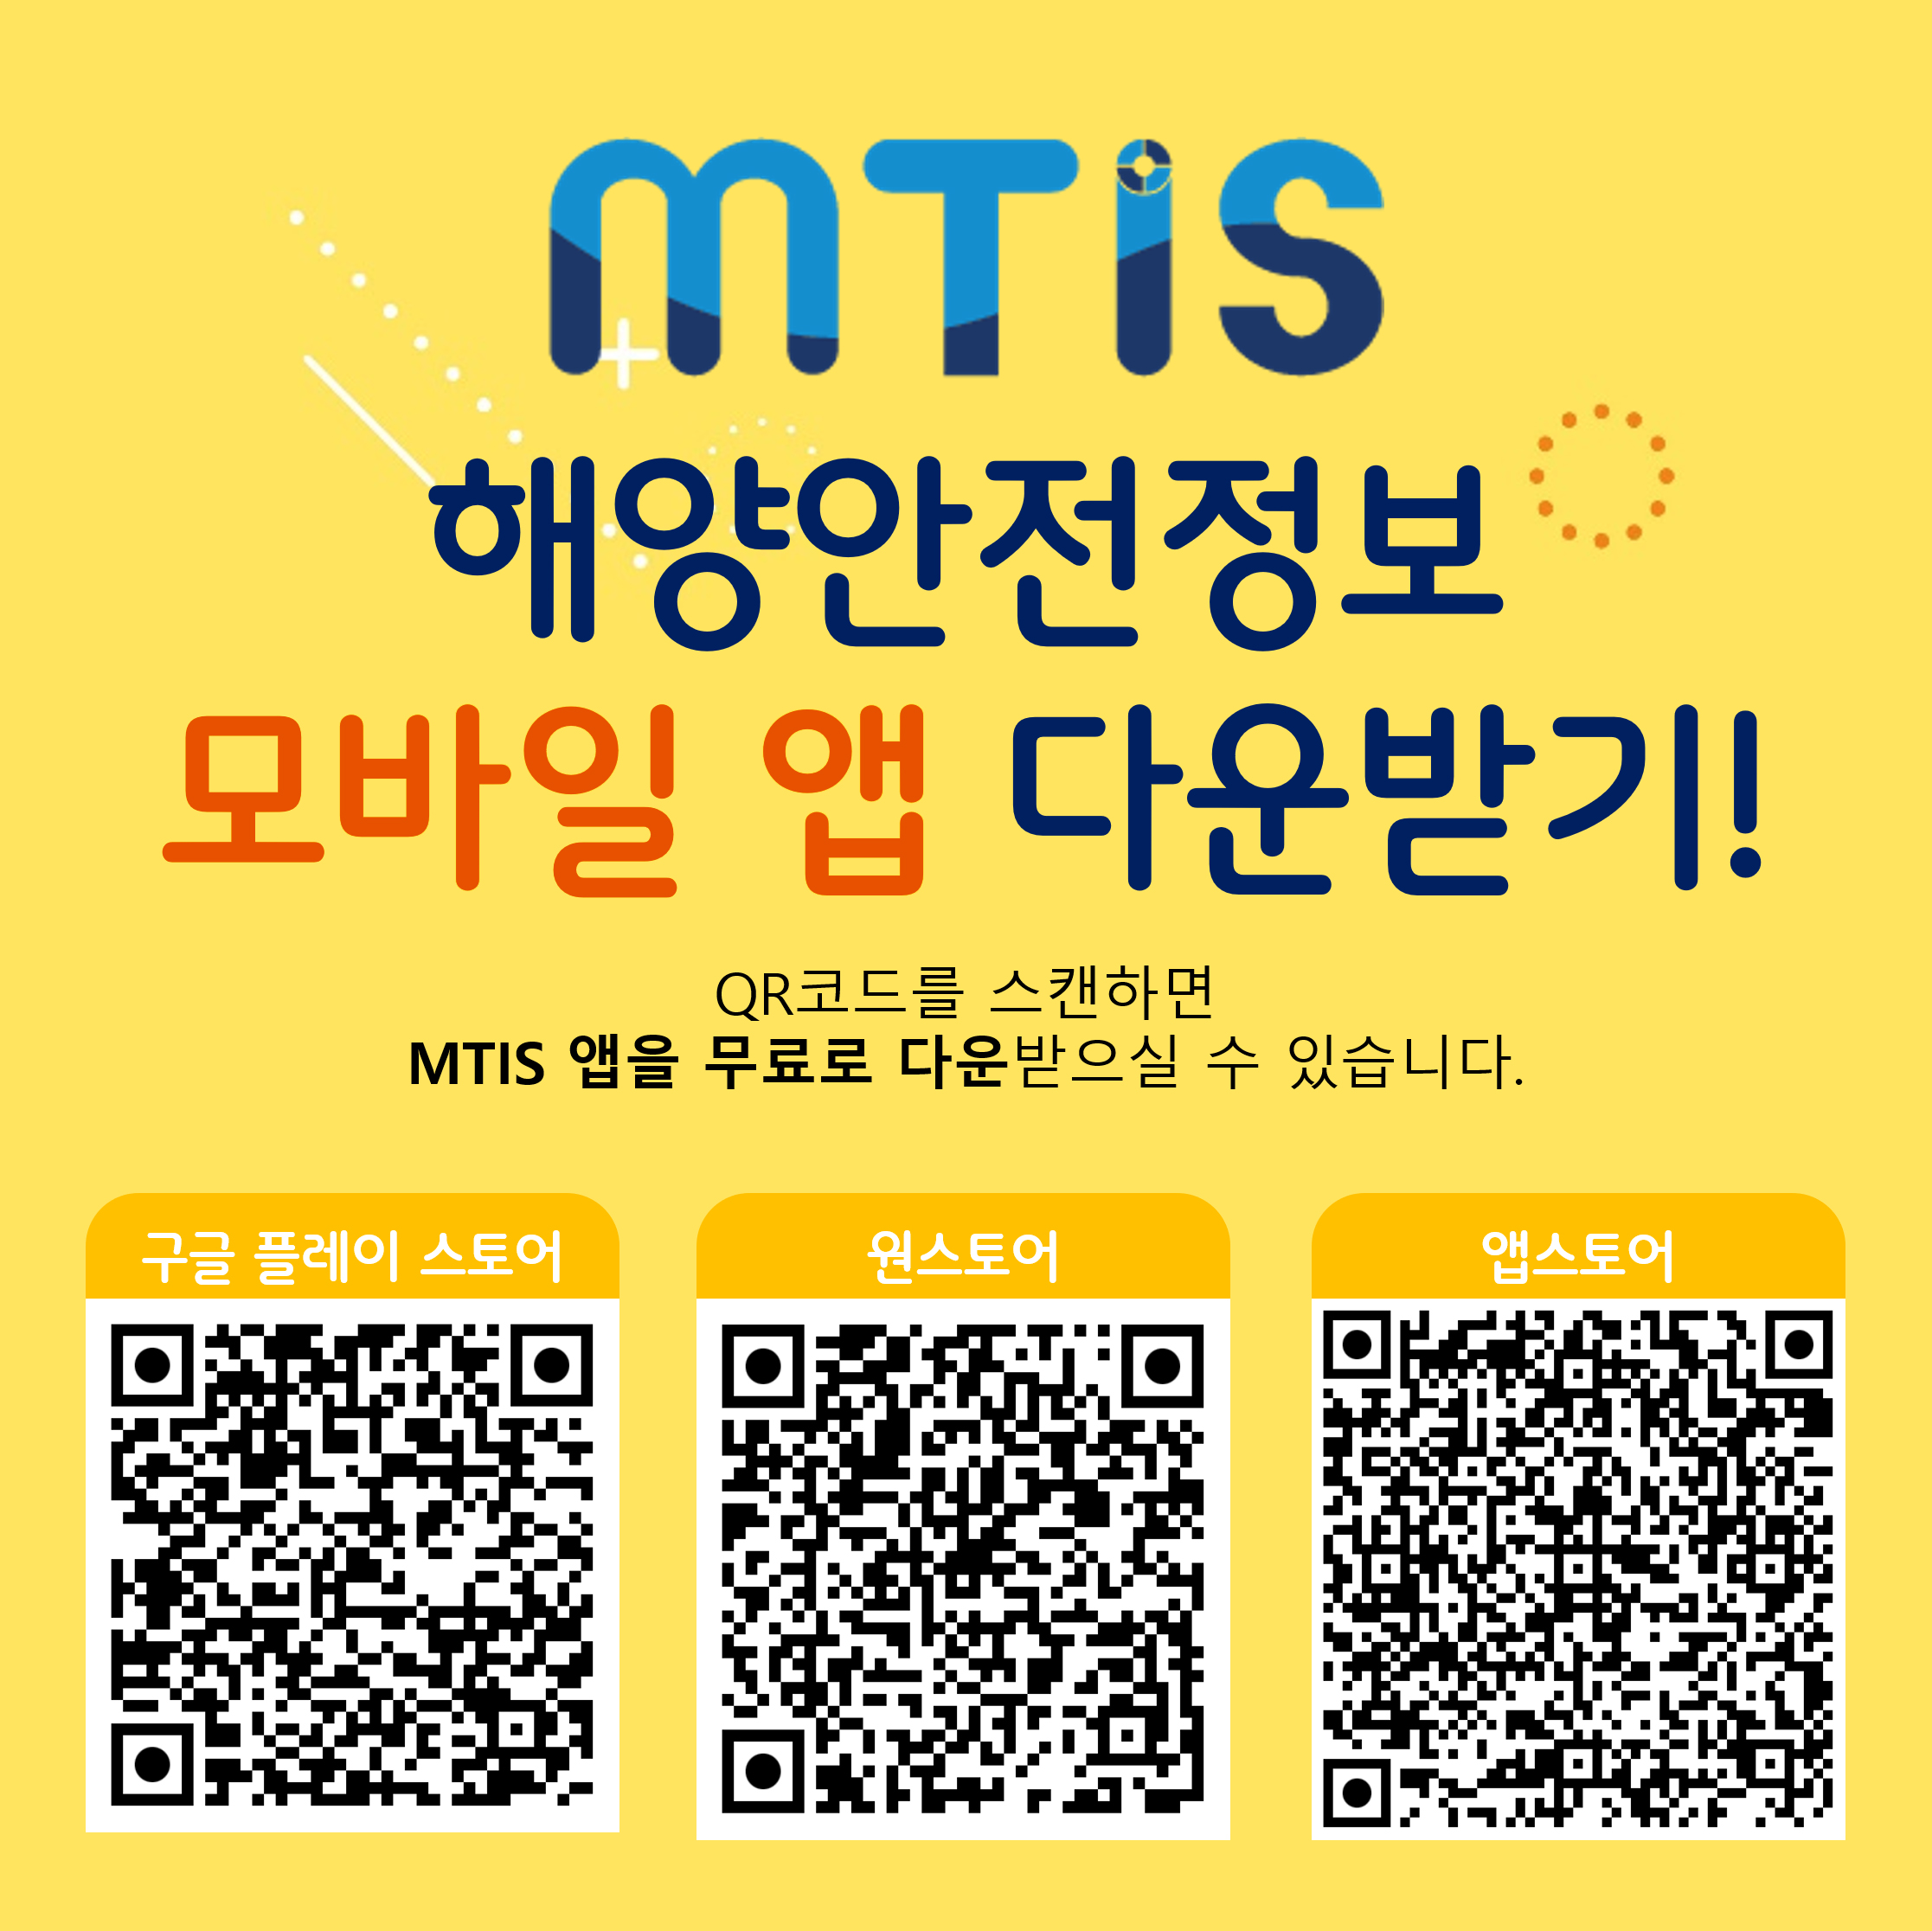 MTIS 해양안전정보 모바일 앱 다운받기!
QR코드를 스캔하면 MTIS 앱을 무료로 다운 받으실수 있습니다.
구글 플레이 스토어 : https://play.google.com/store/apps/details;jsessionid=016AB57030A74A81CD672D1402194468?id=kr.or.komsa.mtis
원스토어 : https://m.onestore.co.kr/mobilepoc/apps/appsDetail.omp?prodId=0000771271
앱스토어 : https://apps.apple.com/kr/app/%ED%95%B4%EC%96%91%EA%B5%90%ED%86%B5%EC%95%88%EC%A0%84%EC%A0%95%EB%B3%B4/id6462842483